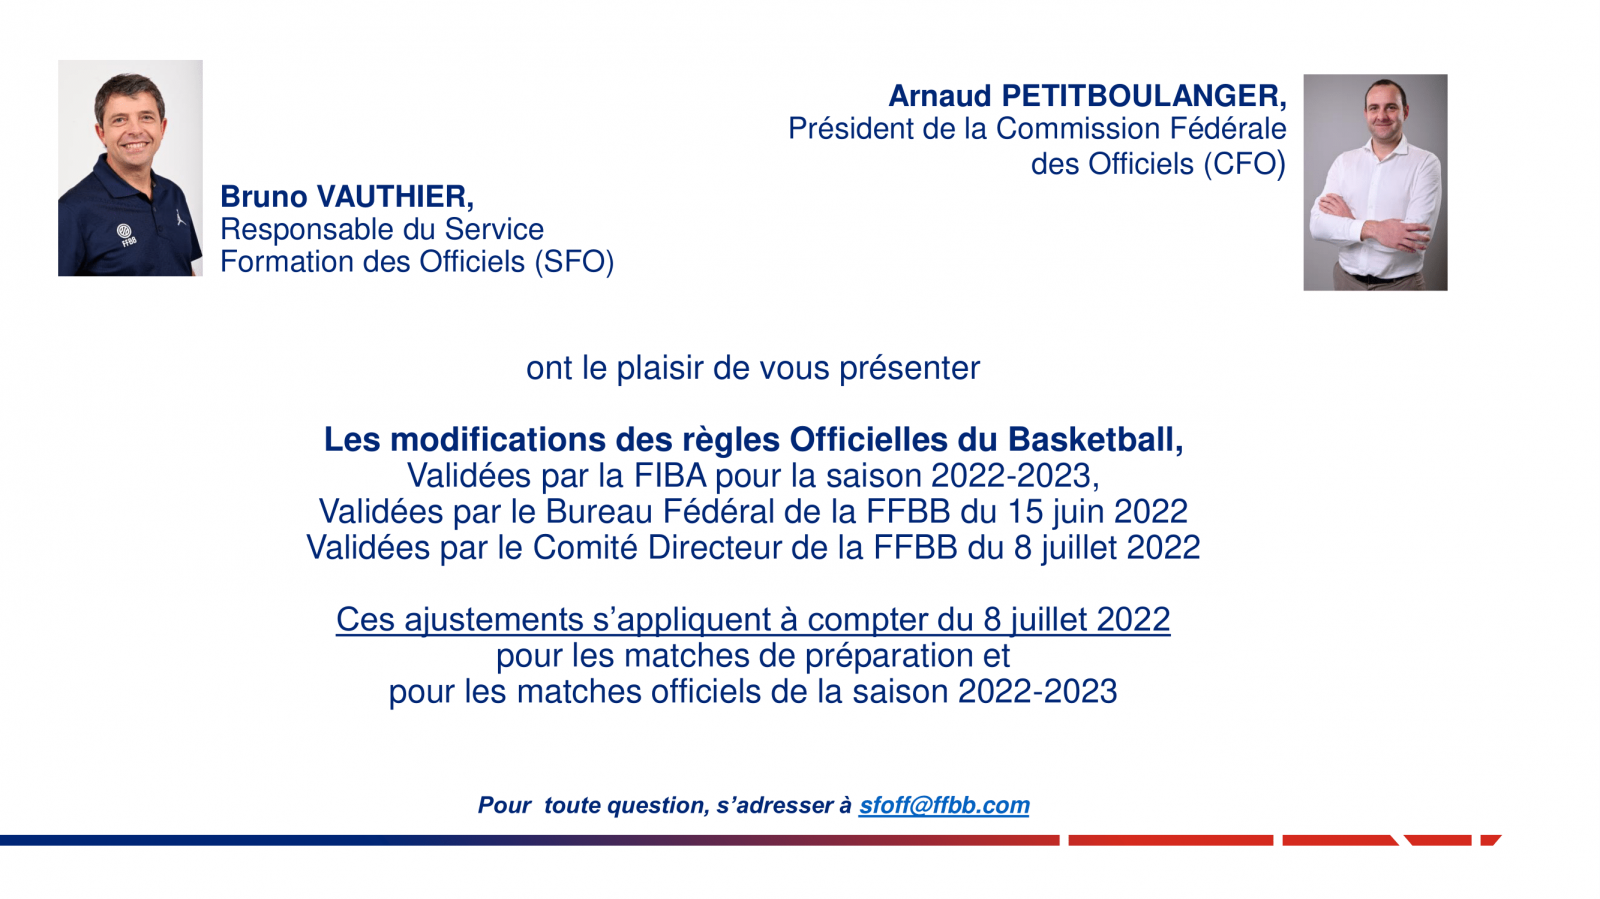 2022-08-19-Nouvelles-Regles-FIBA-2022-2023-applicables-en-France-a-compter-du-8-juillet-2022-02